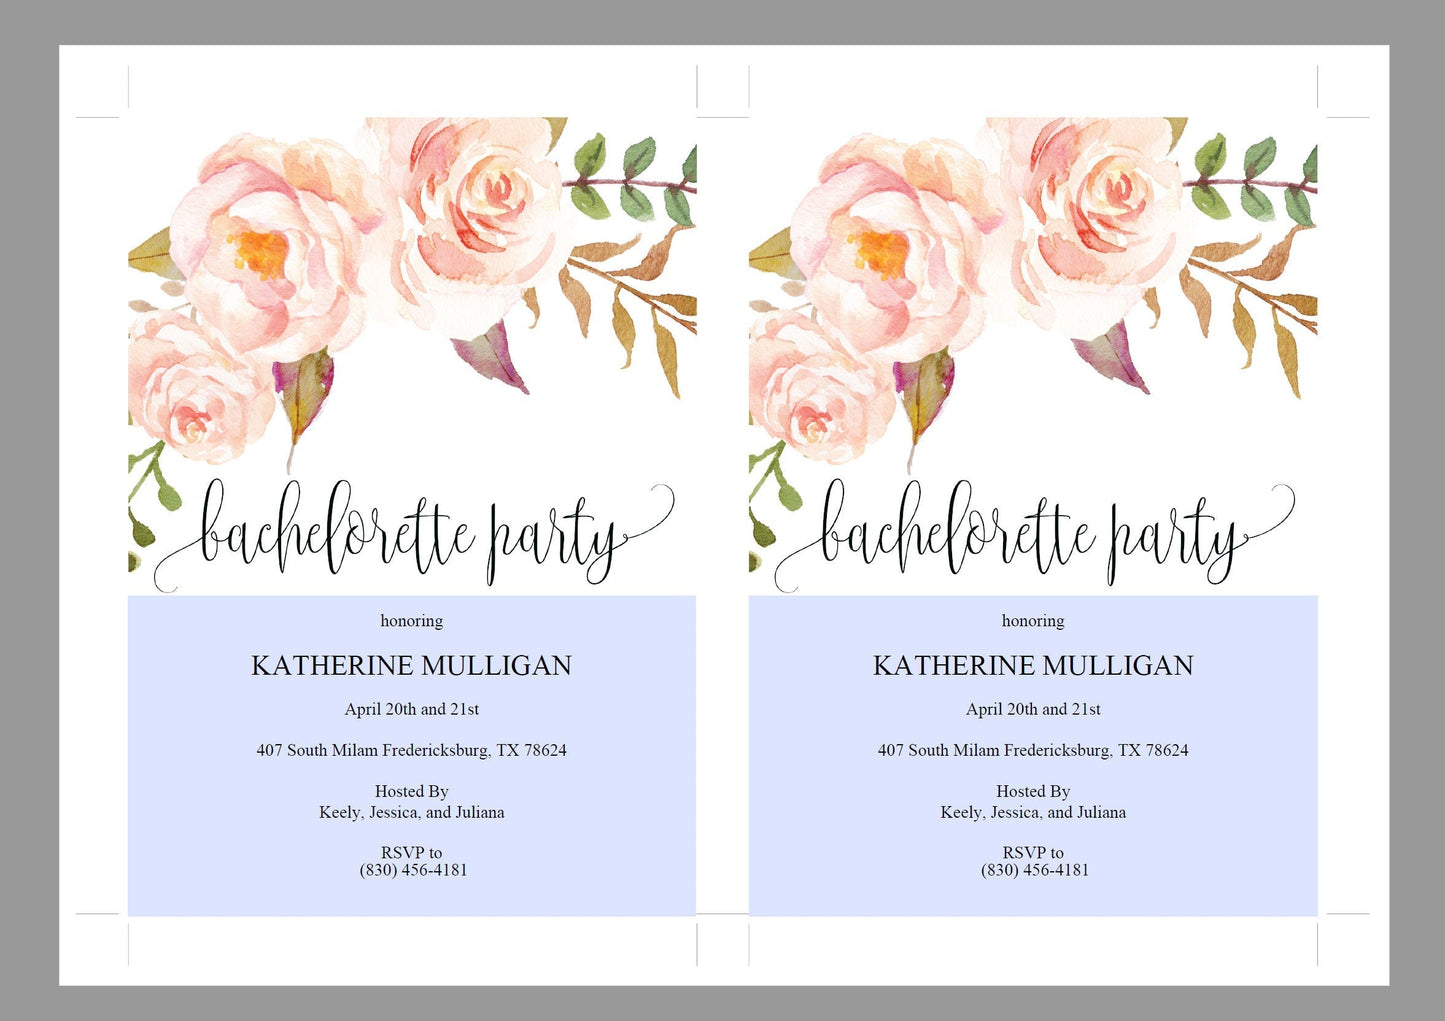 Bachelorette Party Invite, DIY Editable Instant Download Bachelorette Invites, Blush Floral Invitation Template - Katherine SHOWERS | BACHELORETTE SAVVY PAPER CO